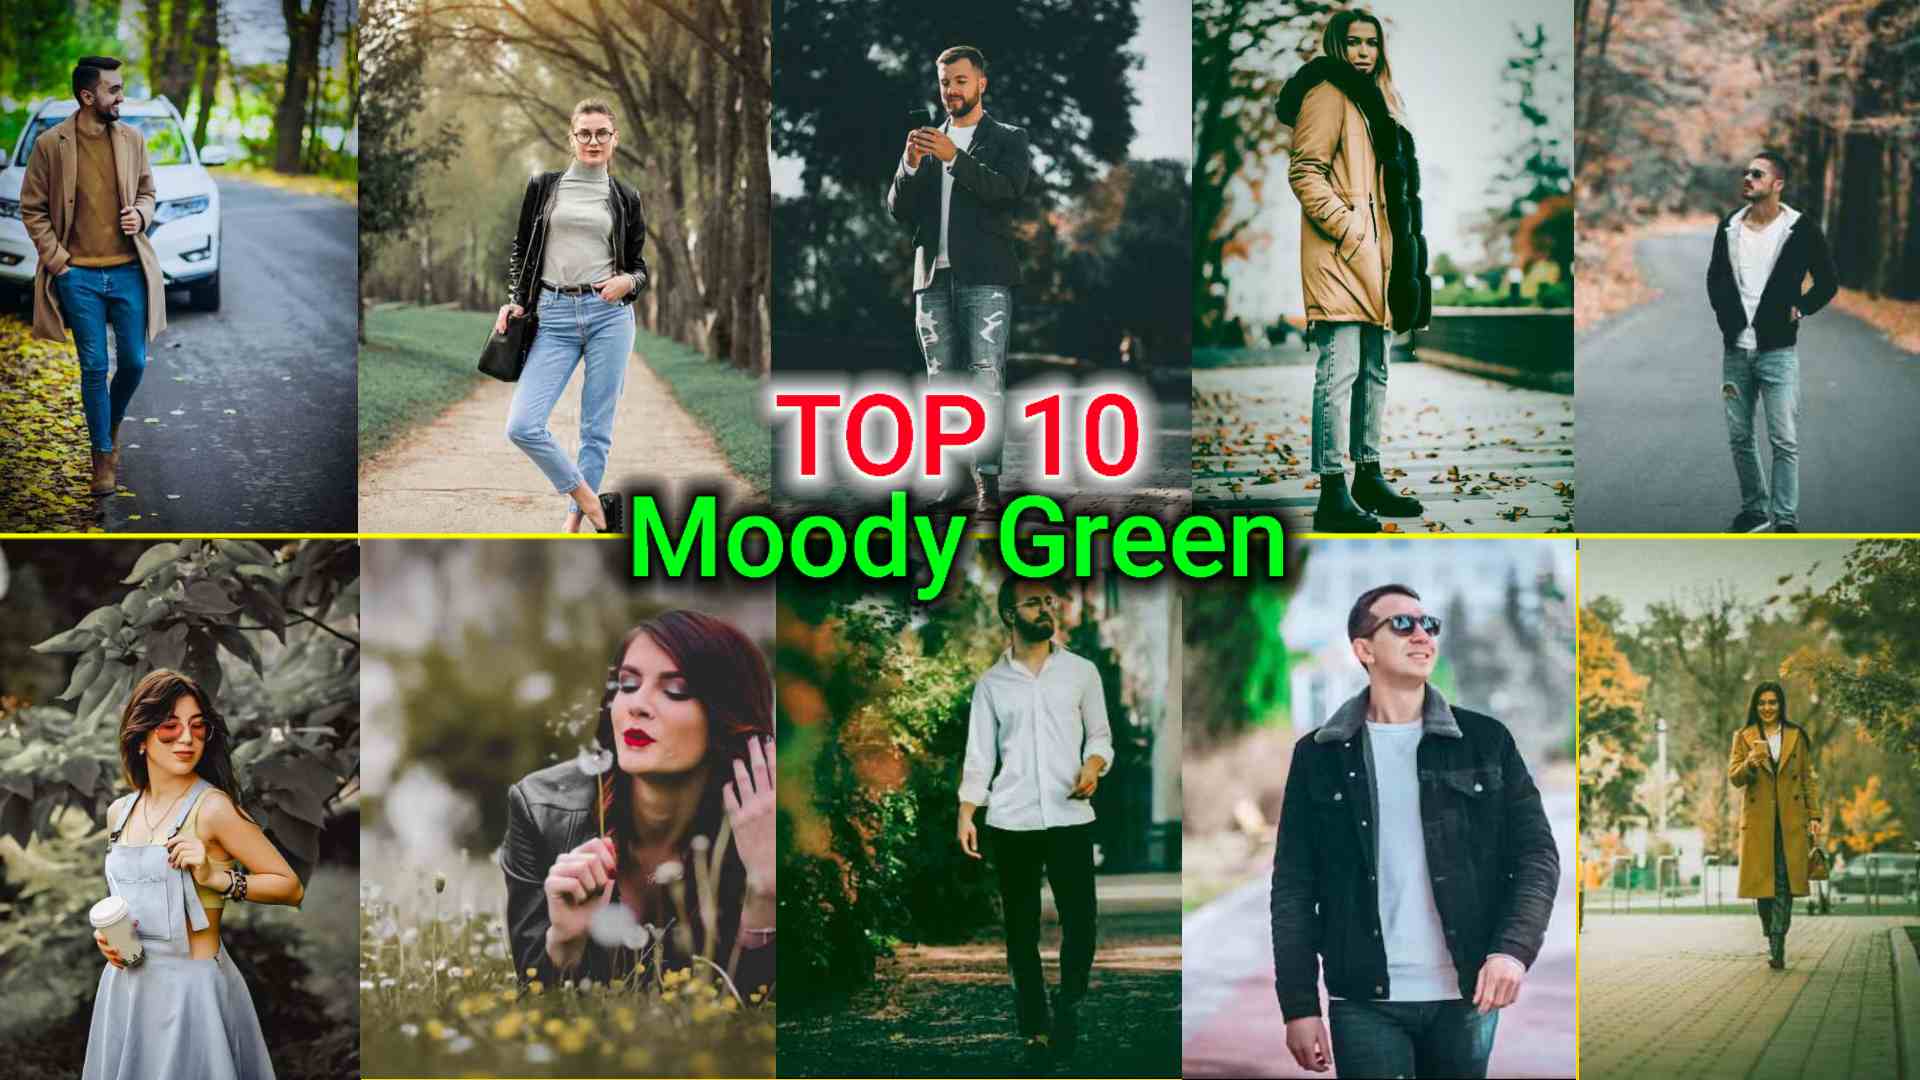 Top 10 Moody Green Lightroom Presets Free Download.